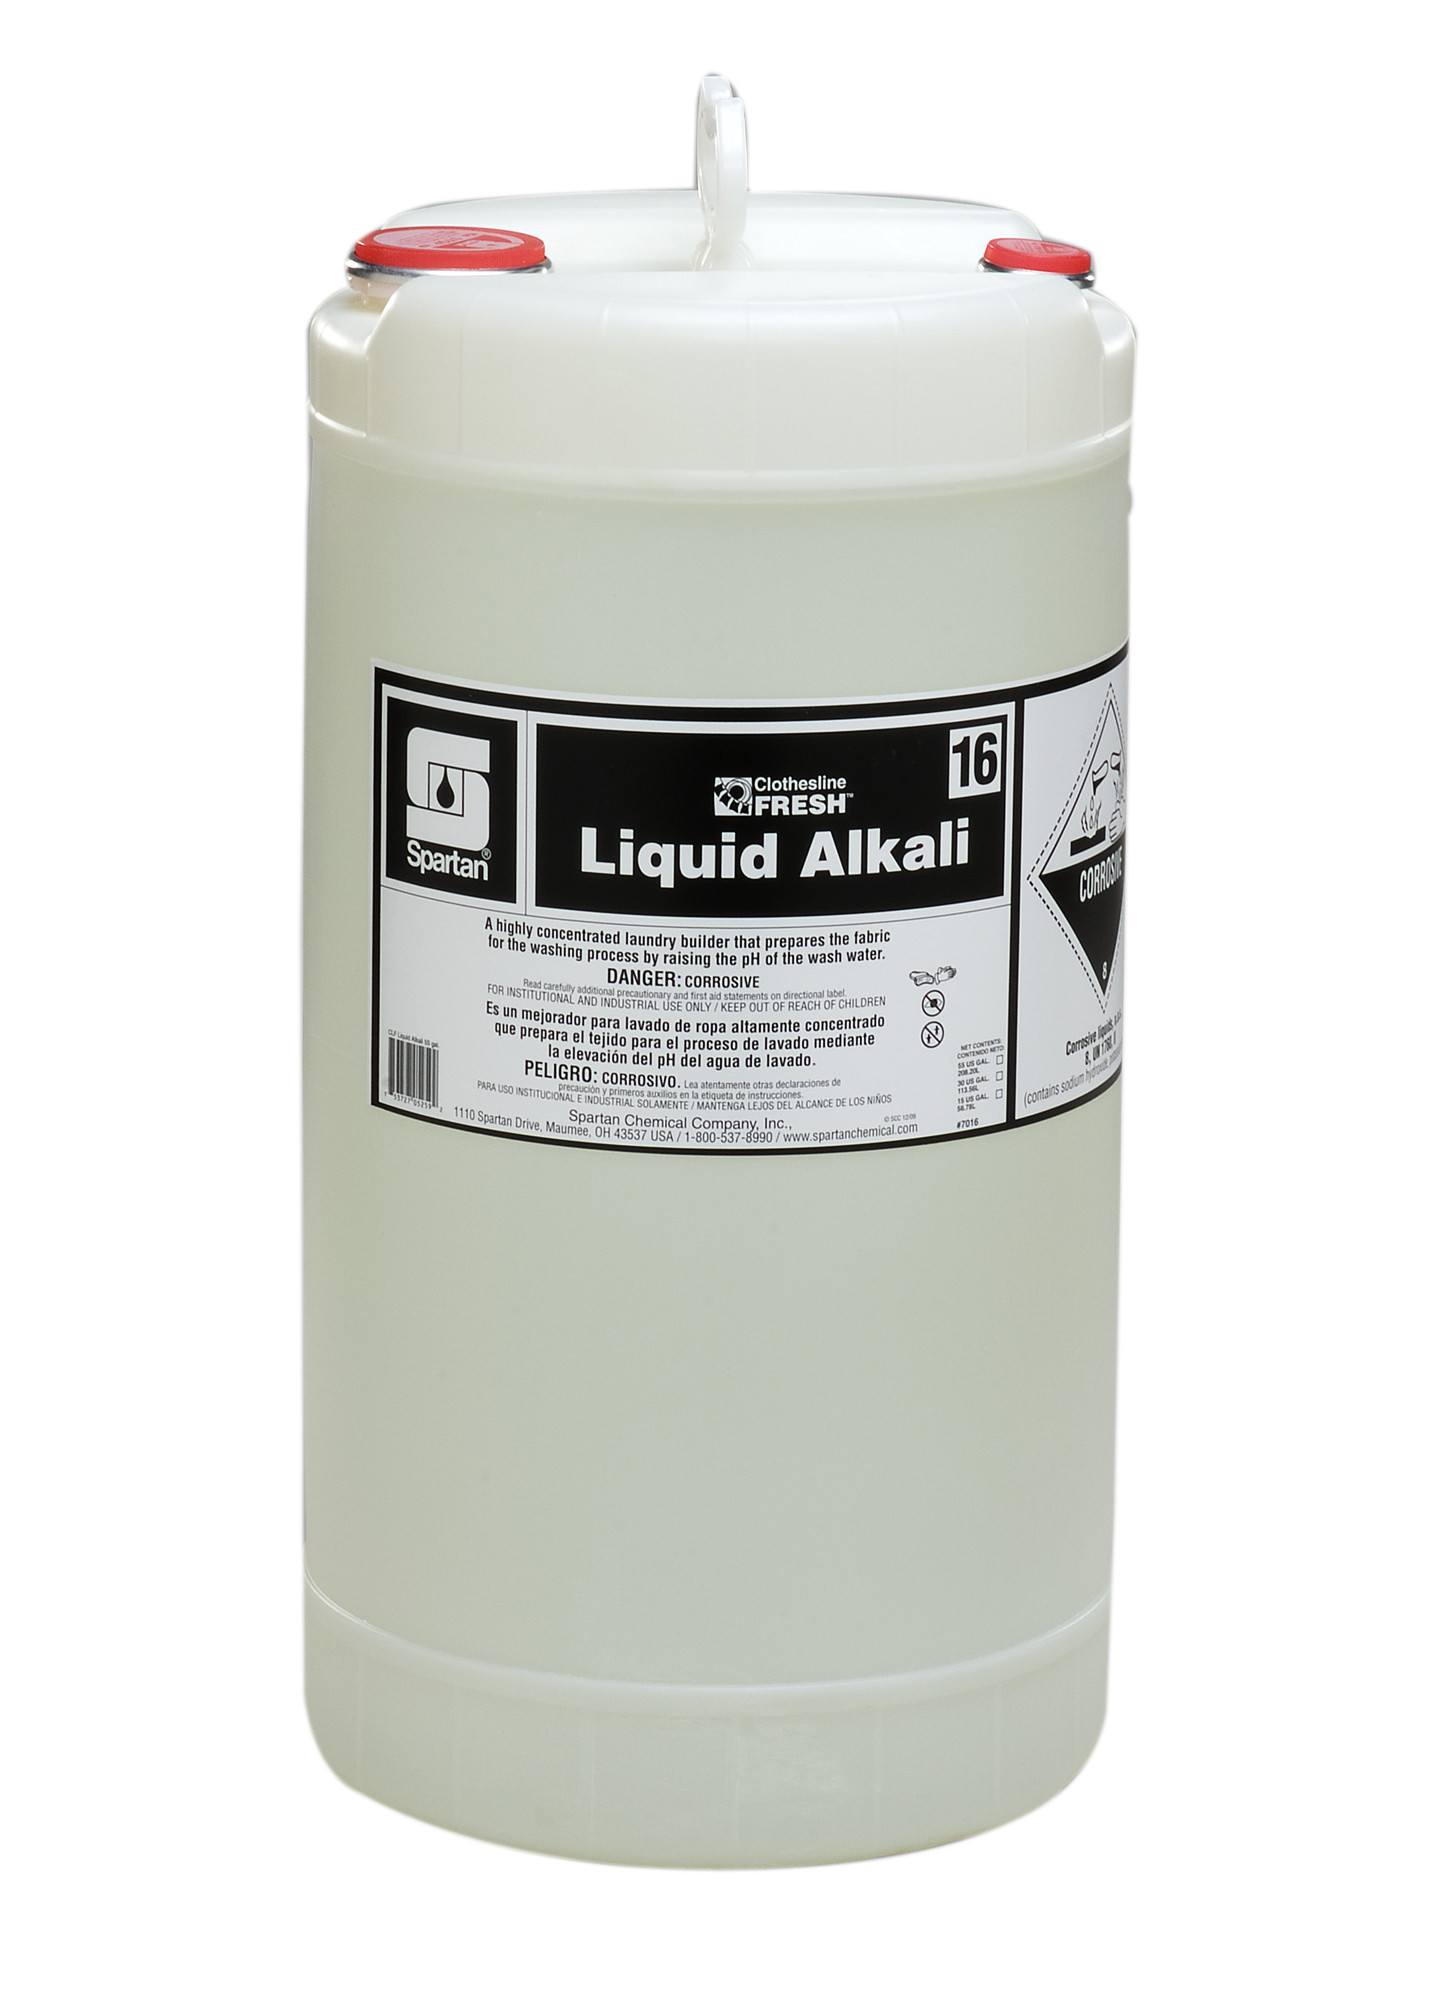 Spartan Chemical Company Clothesline Fresh Liquid Alkali 16, 15 GAL DRUM